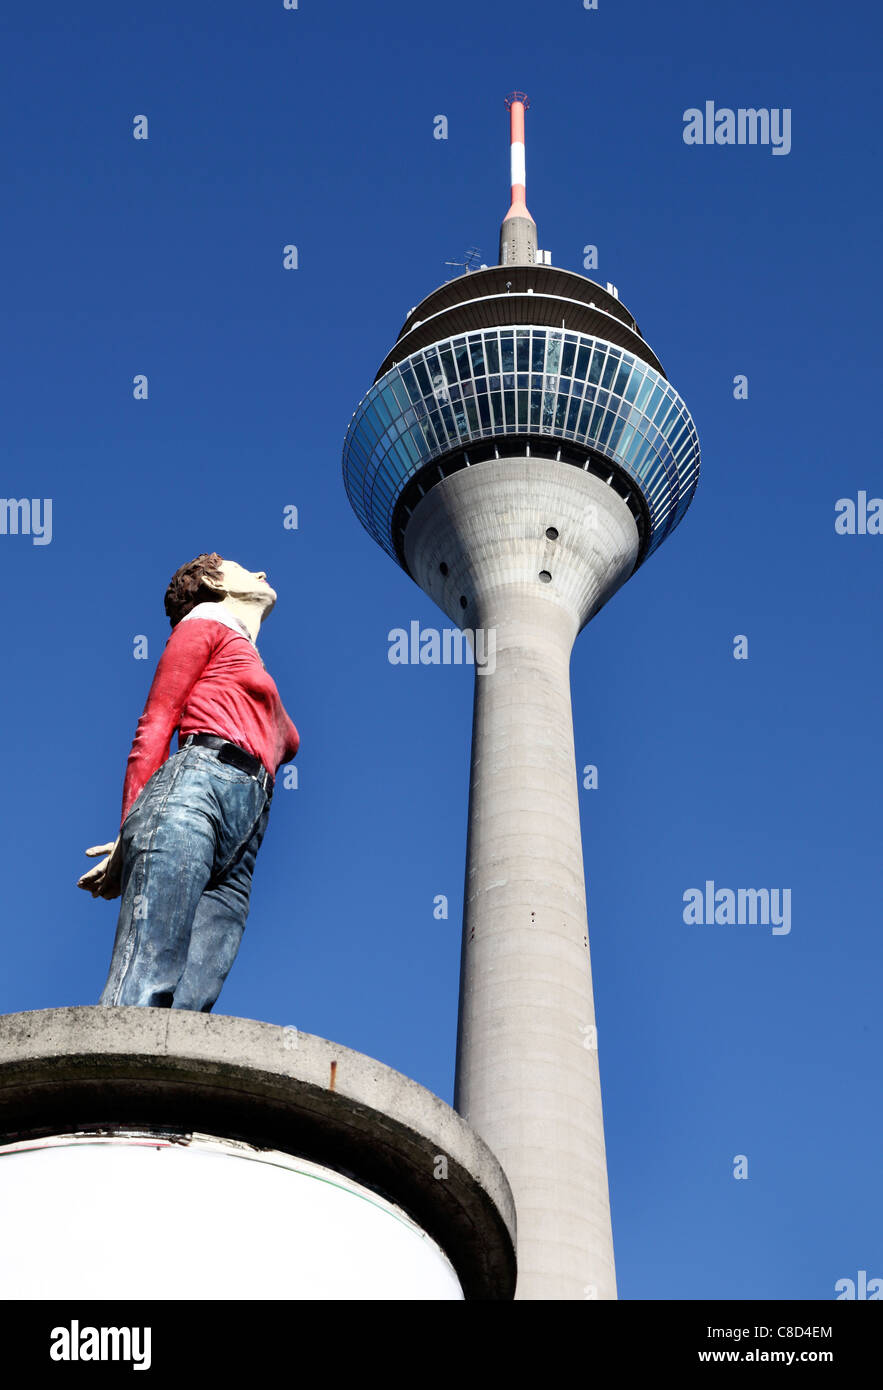 TV-tower, observation tower, viewing tower, Rheinturm, at river Rhine, Düsseldorf, Germany. Stock Photo